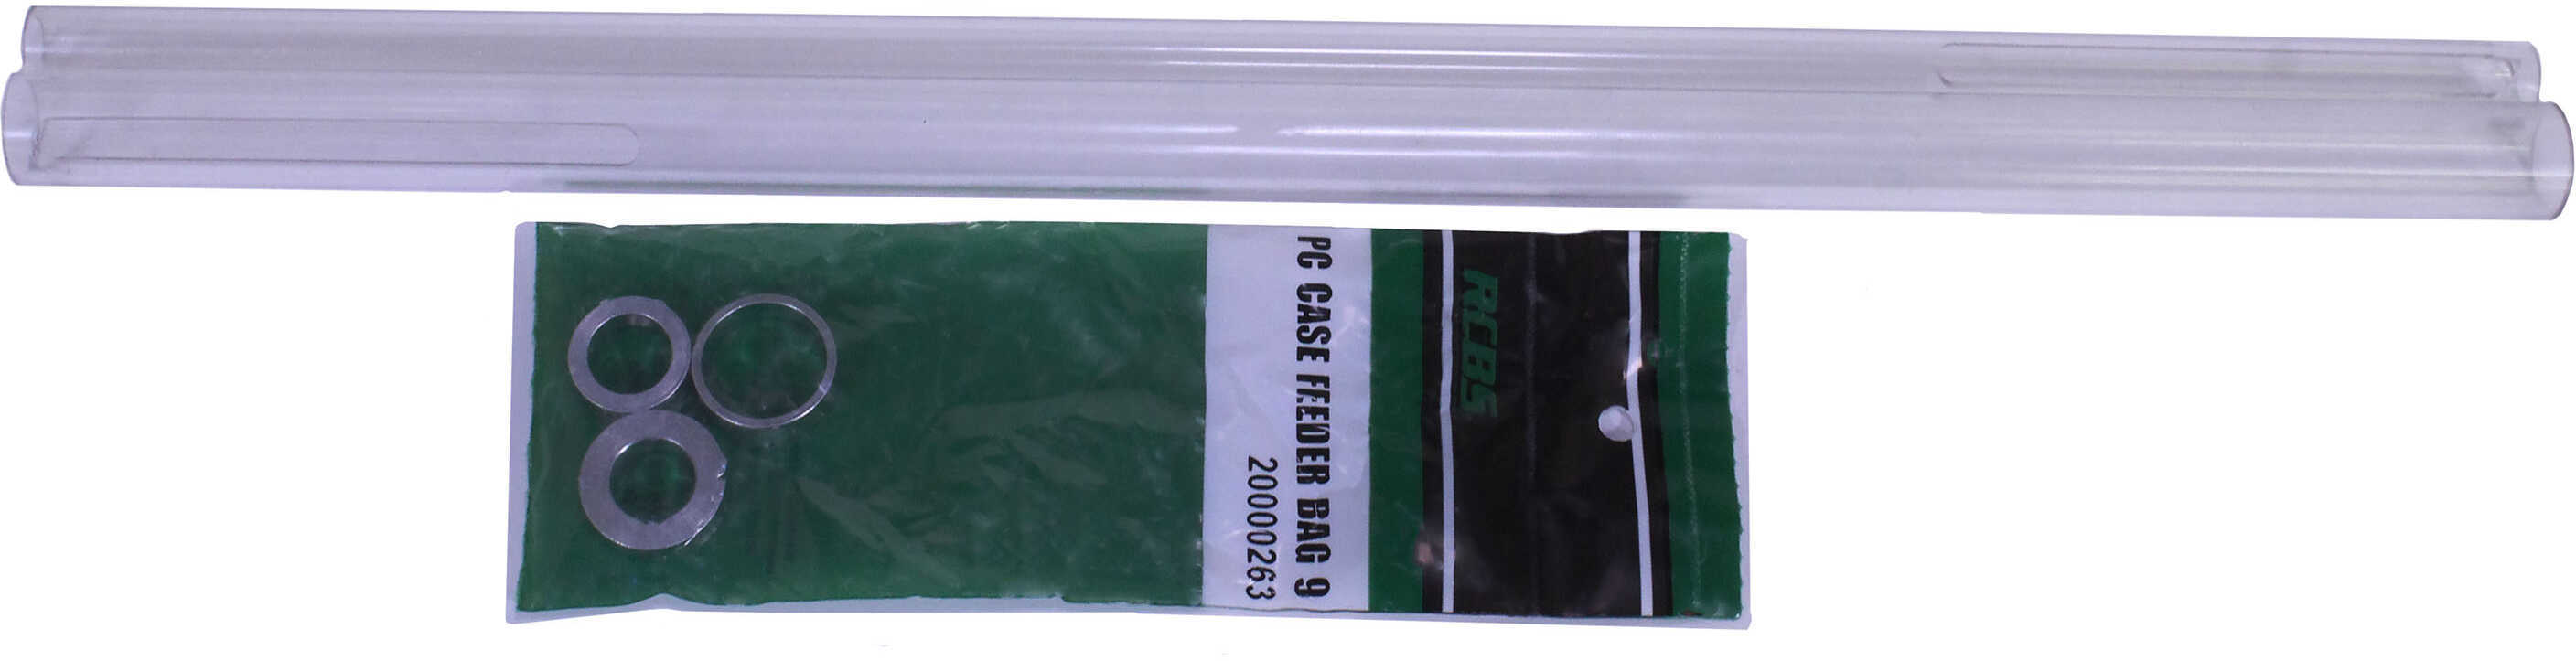 RCBS Pro Chucker Tube Case Feeder Kit Small/Large Md: 88916